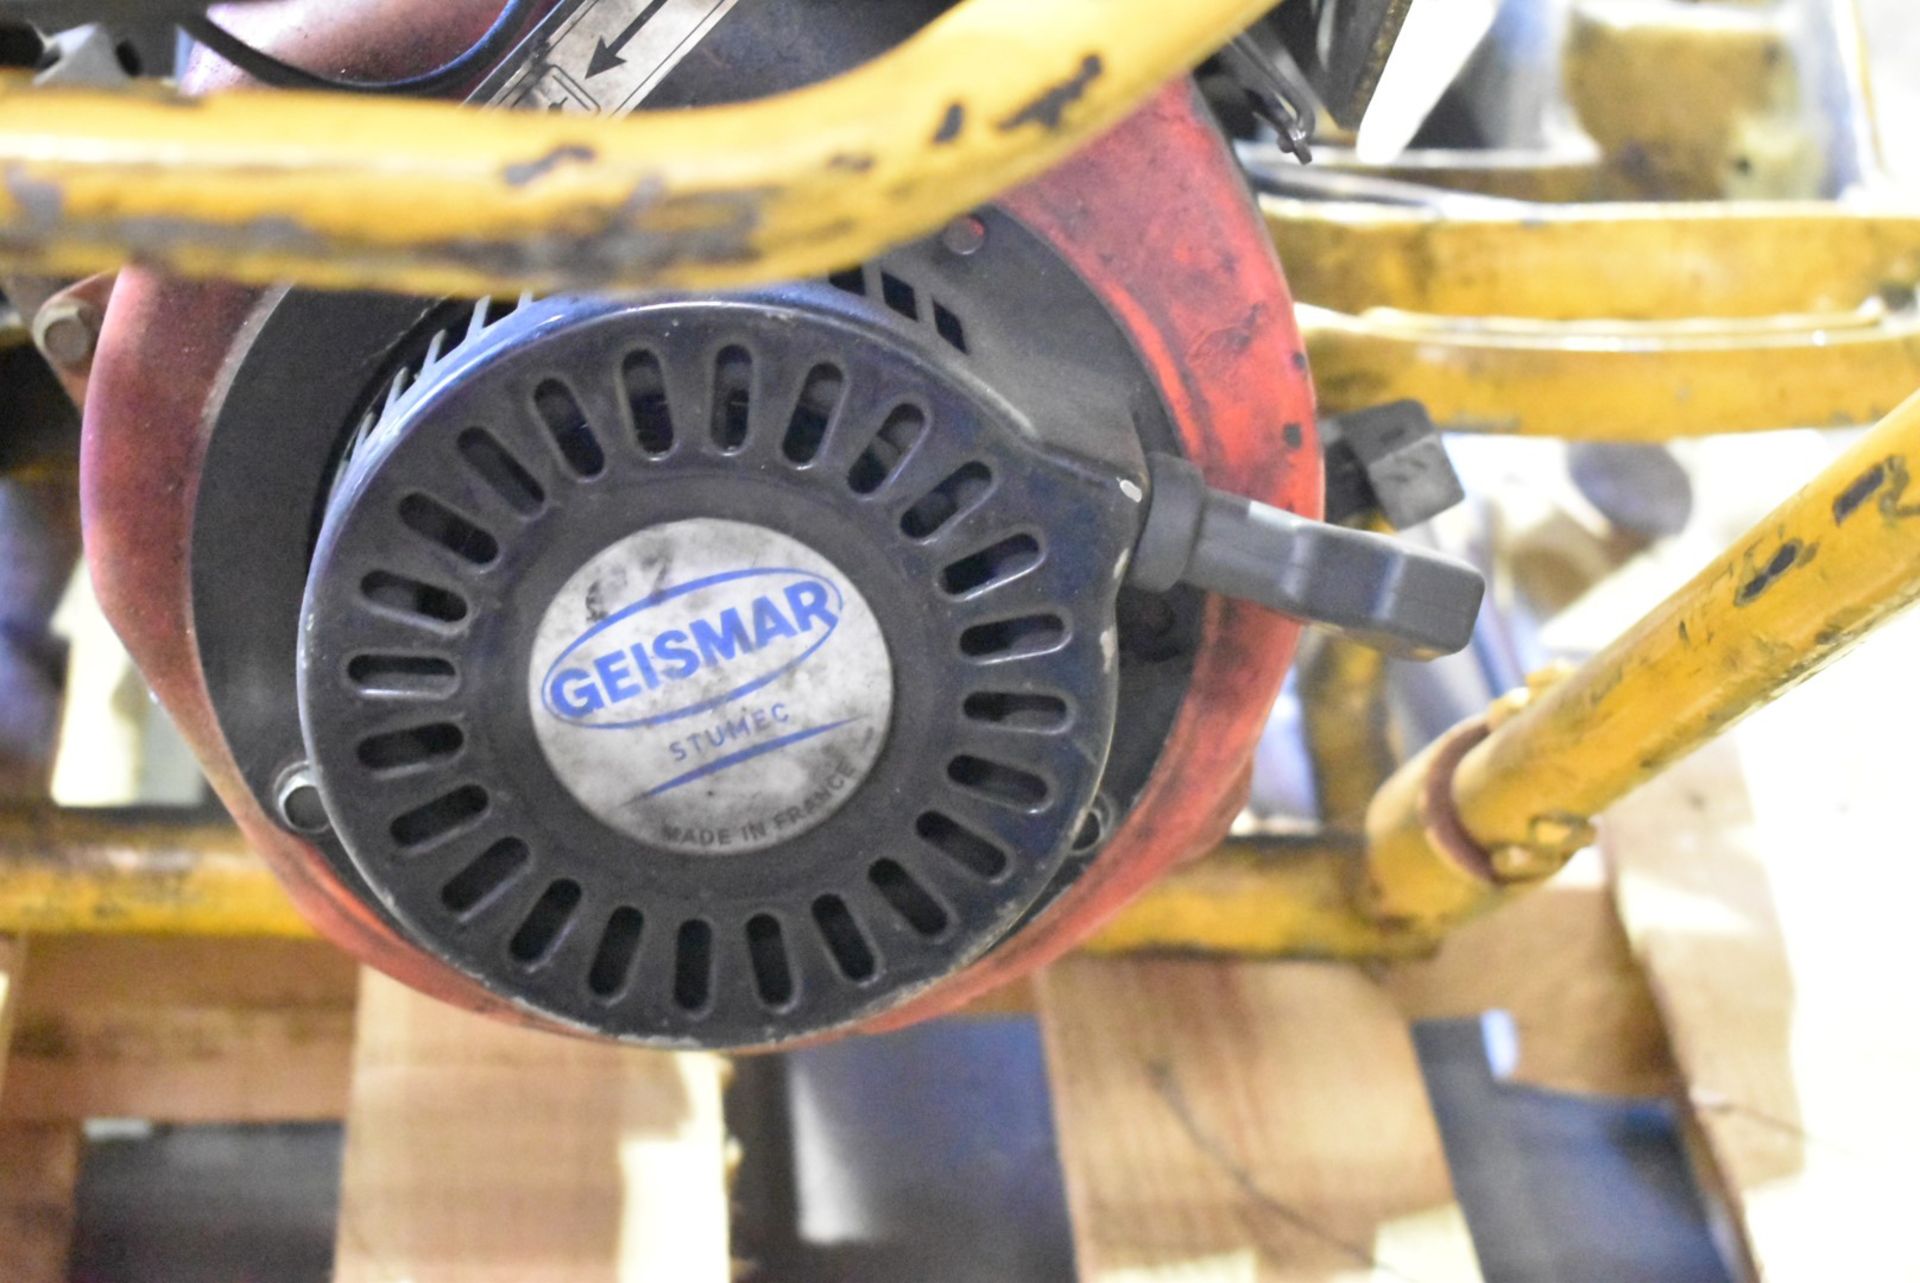 GEISMAR STUMEC 6" GAS-POWERED RAIL GRINDER WITH SPEEDS TO 3800 RPM, S/N: N/A - Image 3 of 5